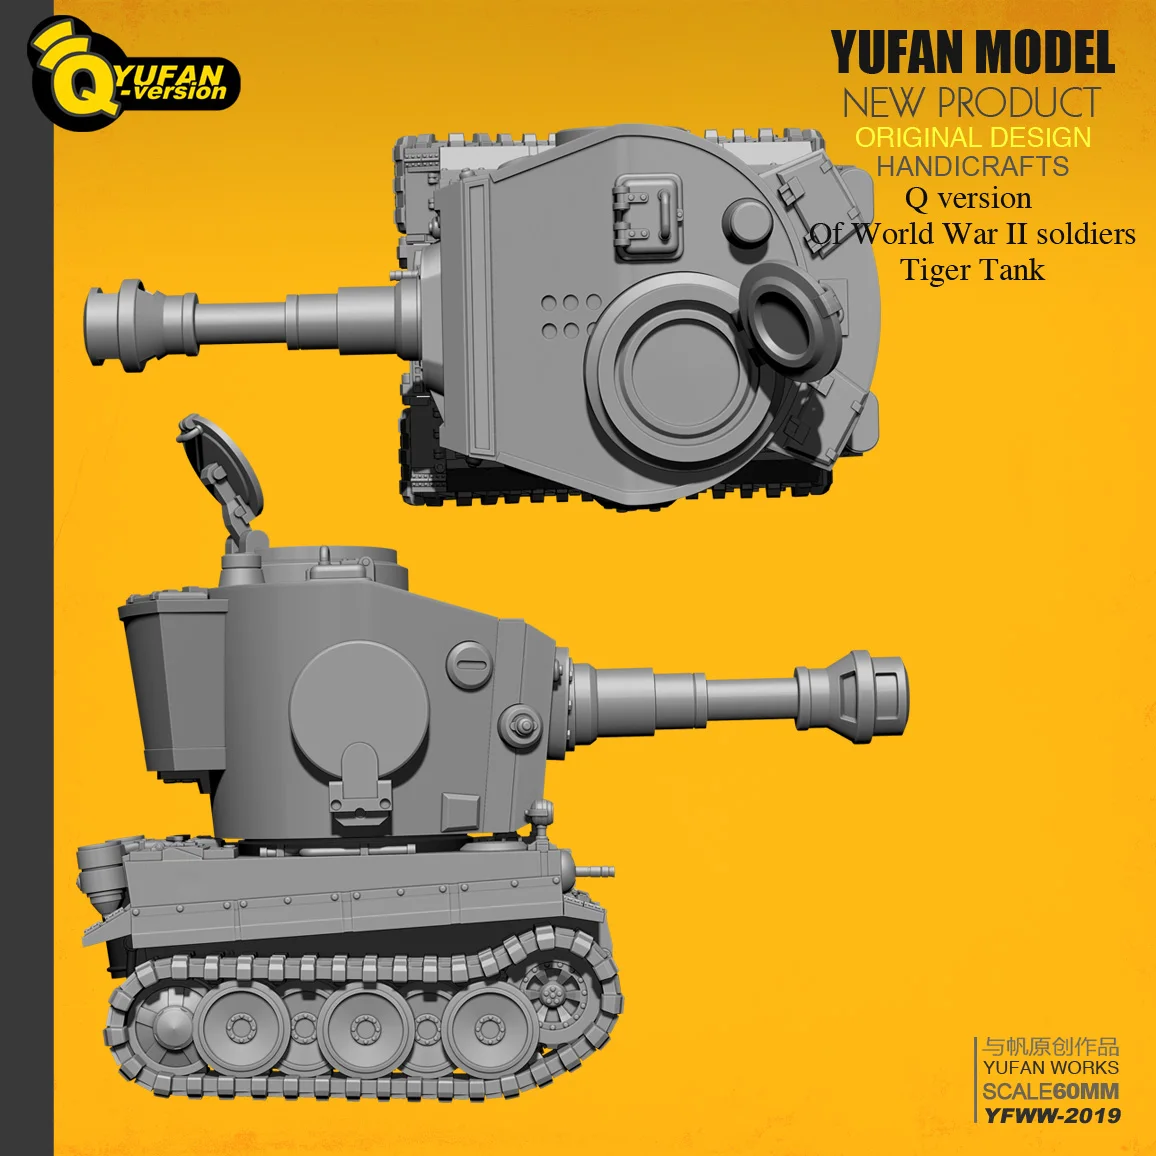 Yufan Modelis Q versija tiger tank derva modelis Yfww-2019